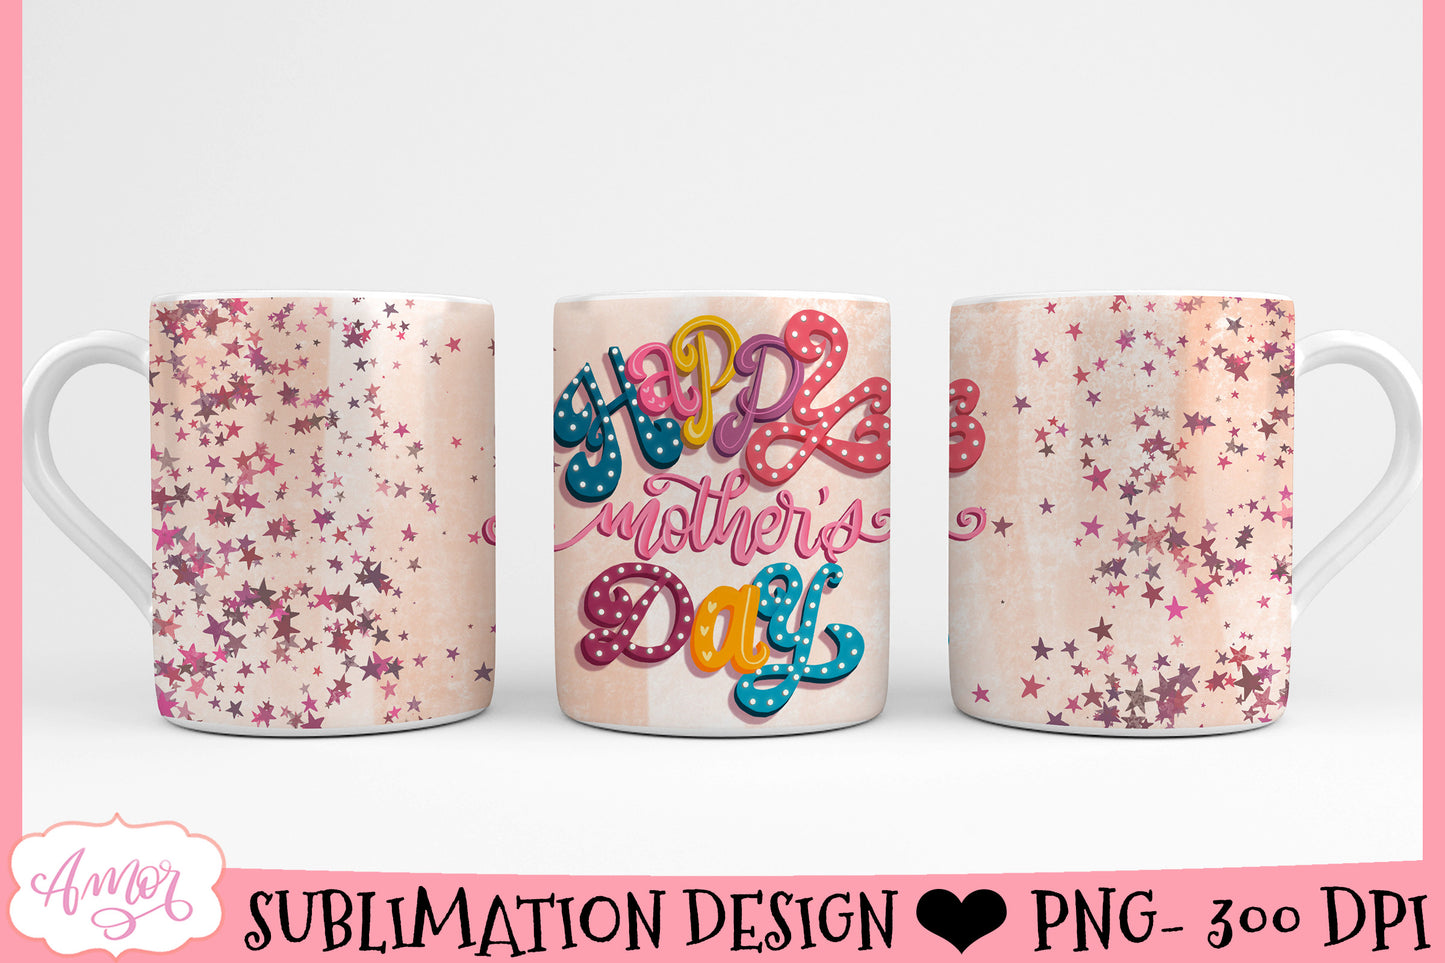 Mother's day mug wrap for sublimation design